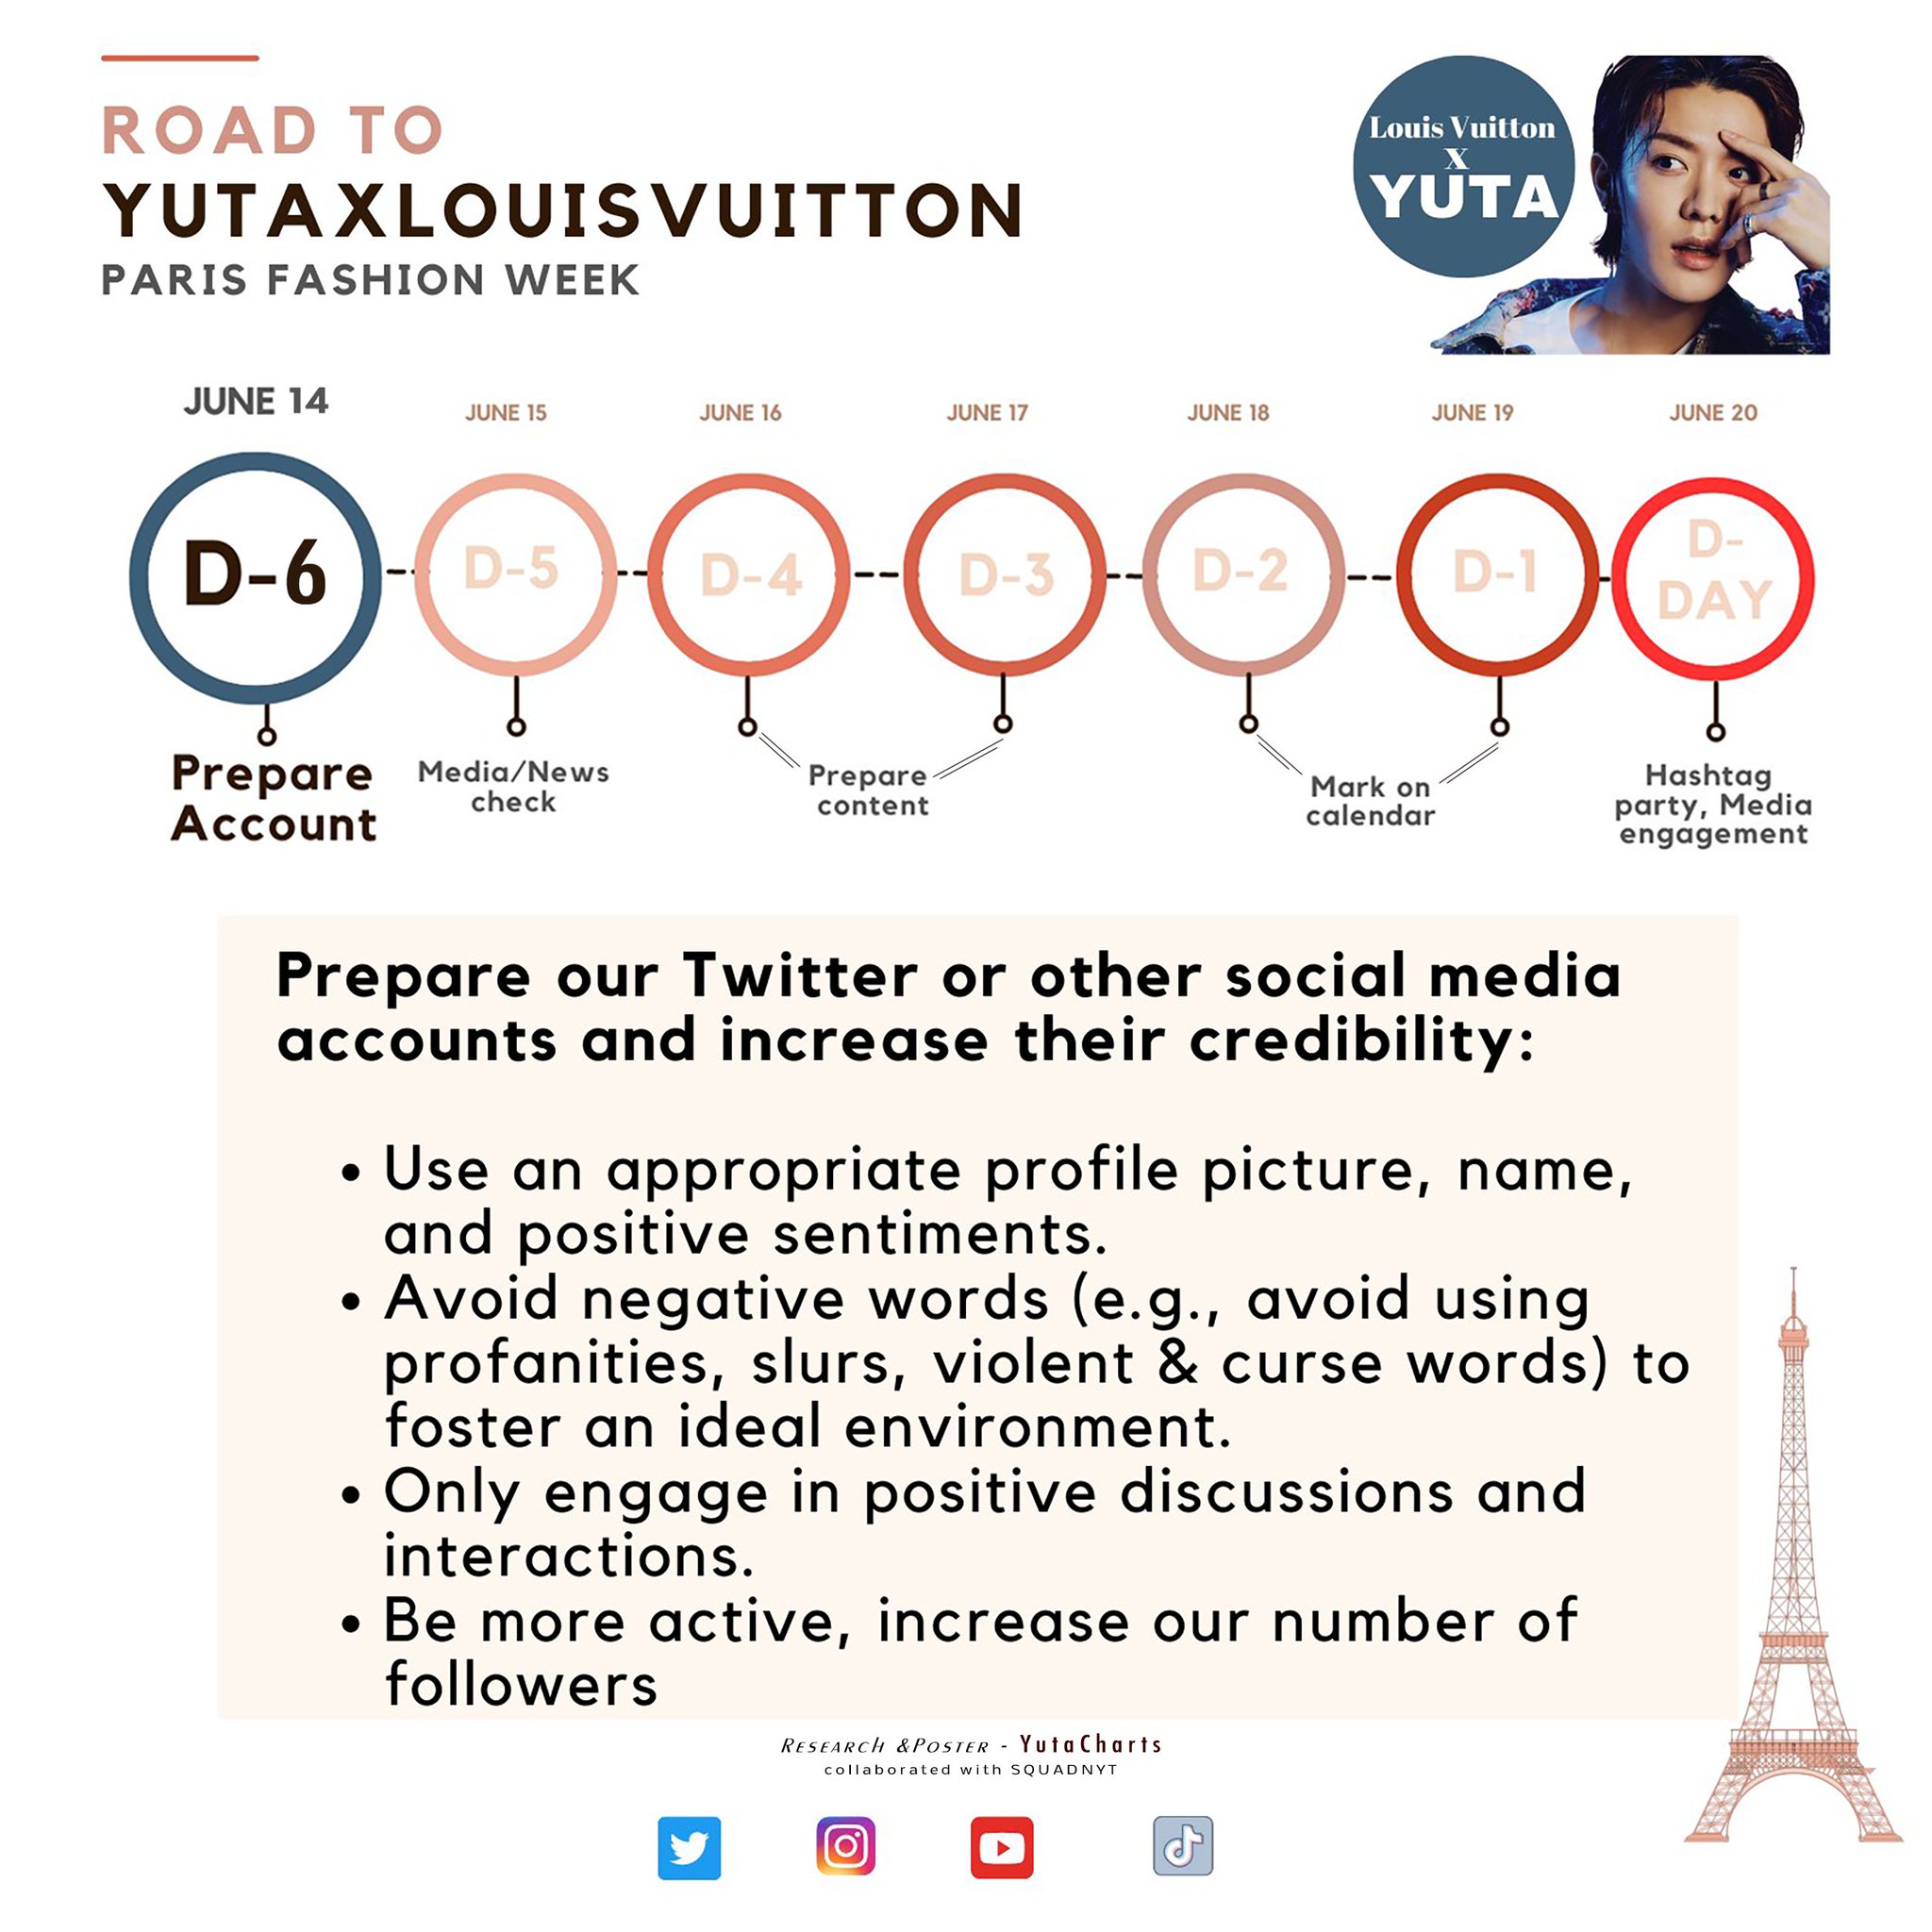 NCT YUTA SQUAD on X: #YUTA will be attending Louis Vuitton PFW